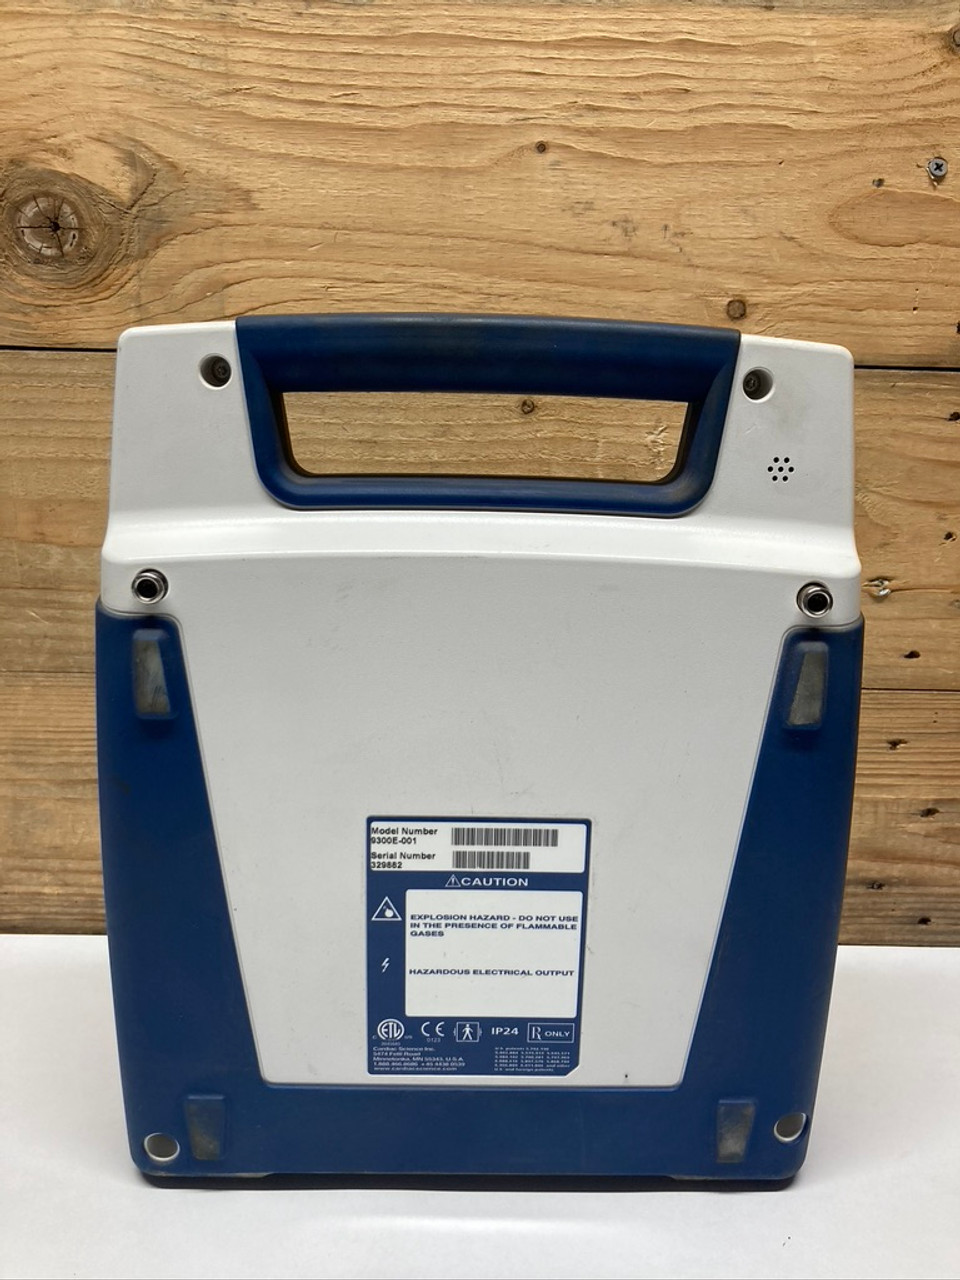 Powerheart AED G3 Automated External Defibrillator 9300E-001 Cardiac Science